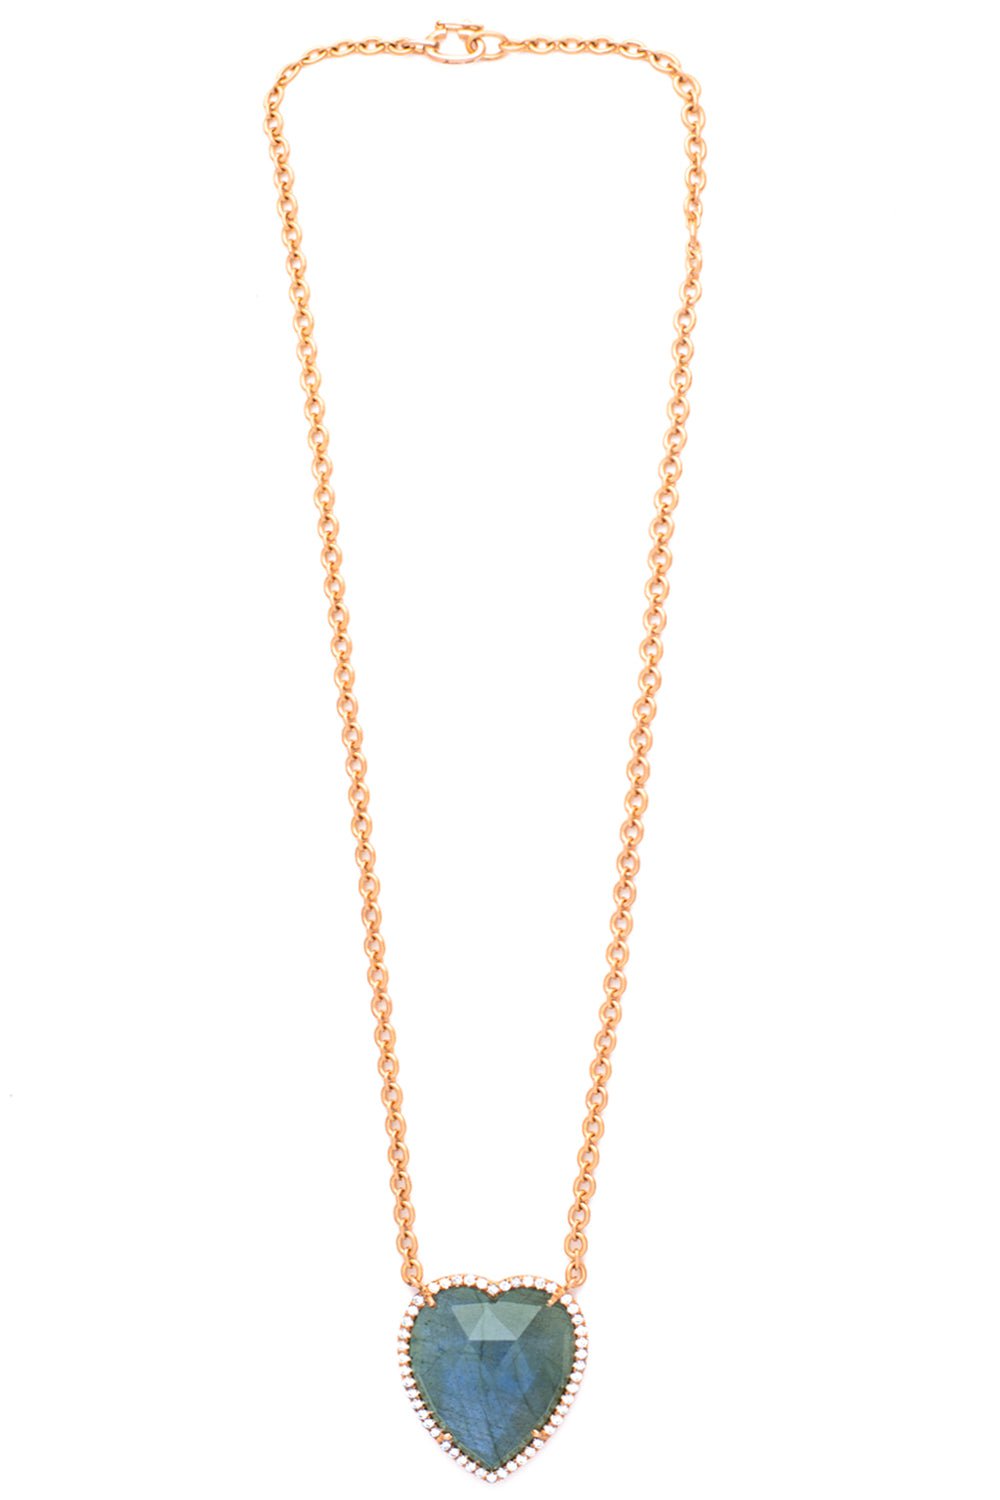 IRENE NEUWIRTH JEWELRY-Labradorite Diamond Heart Necklace-ROSE GOLD